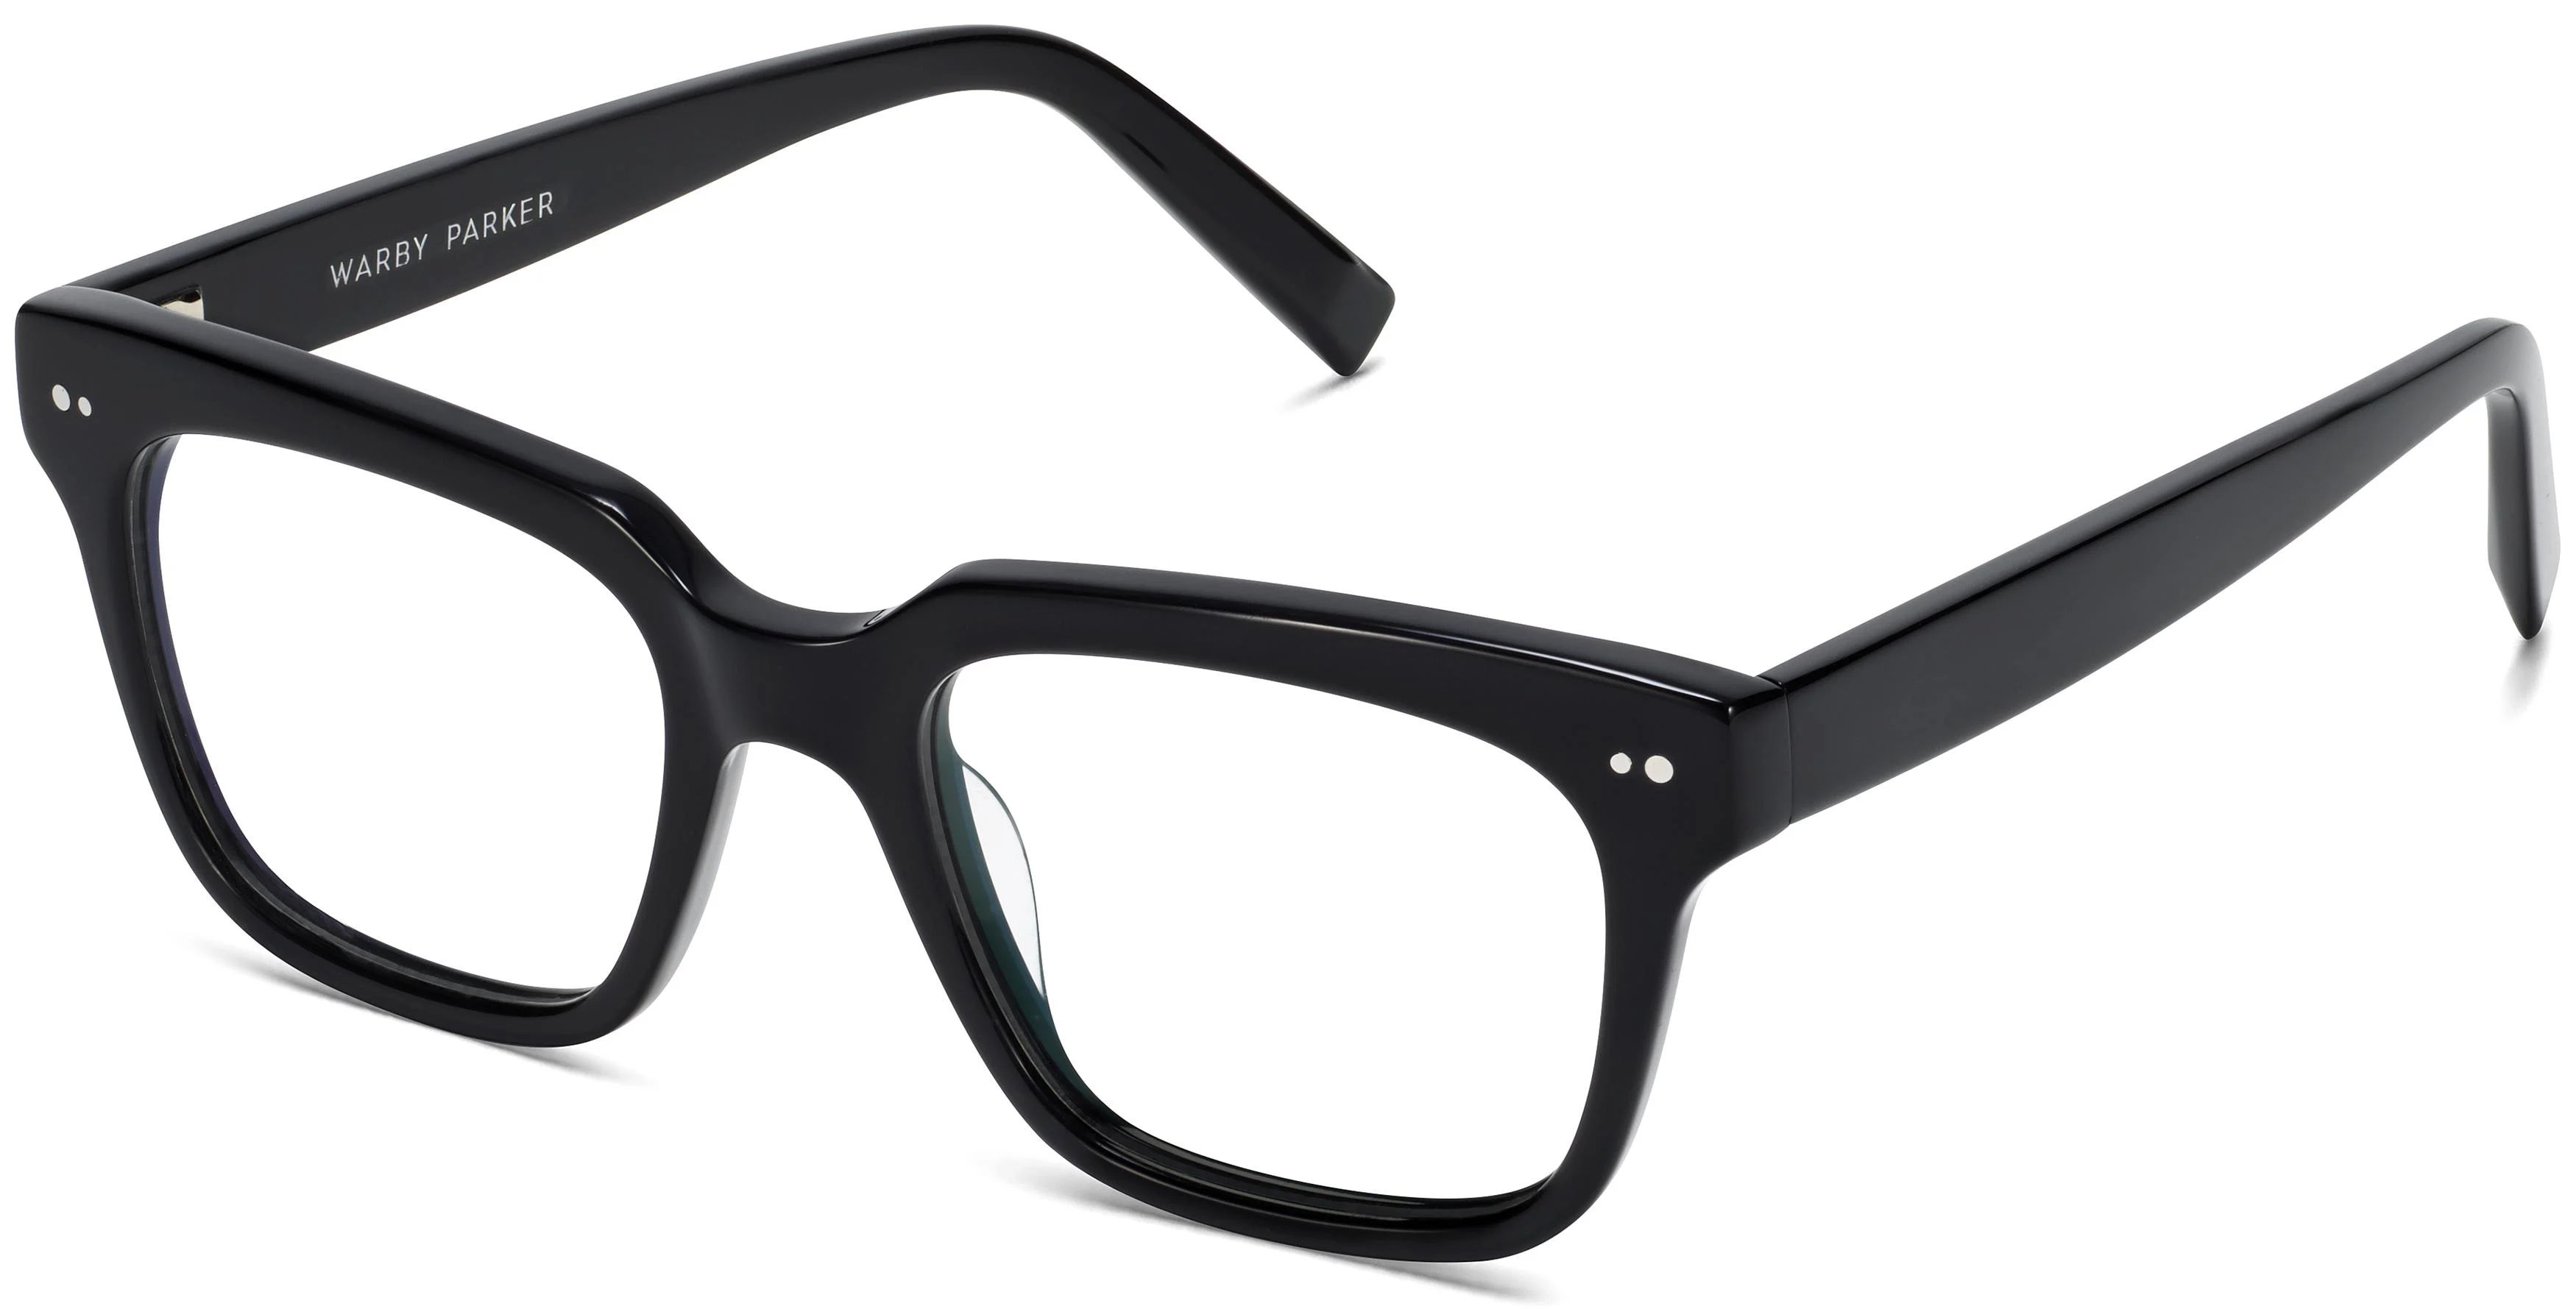 Winston | Warby Parker (US)